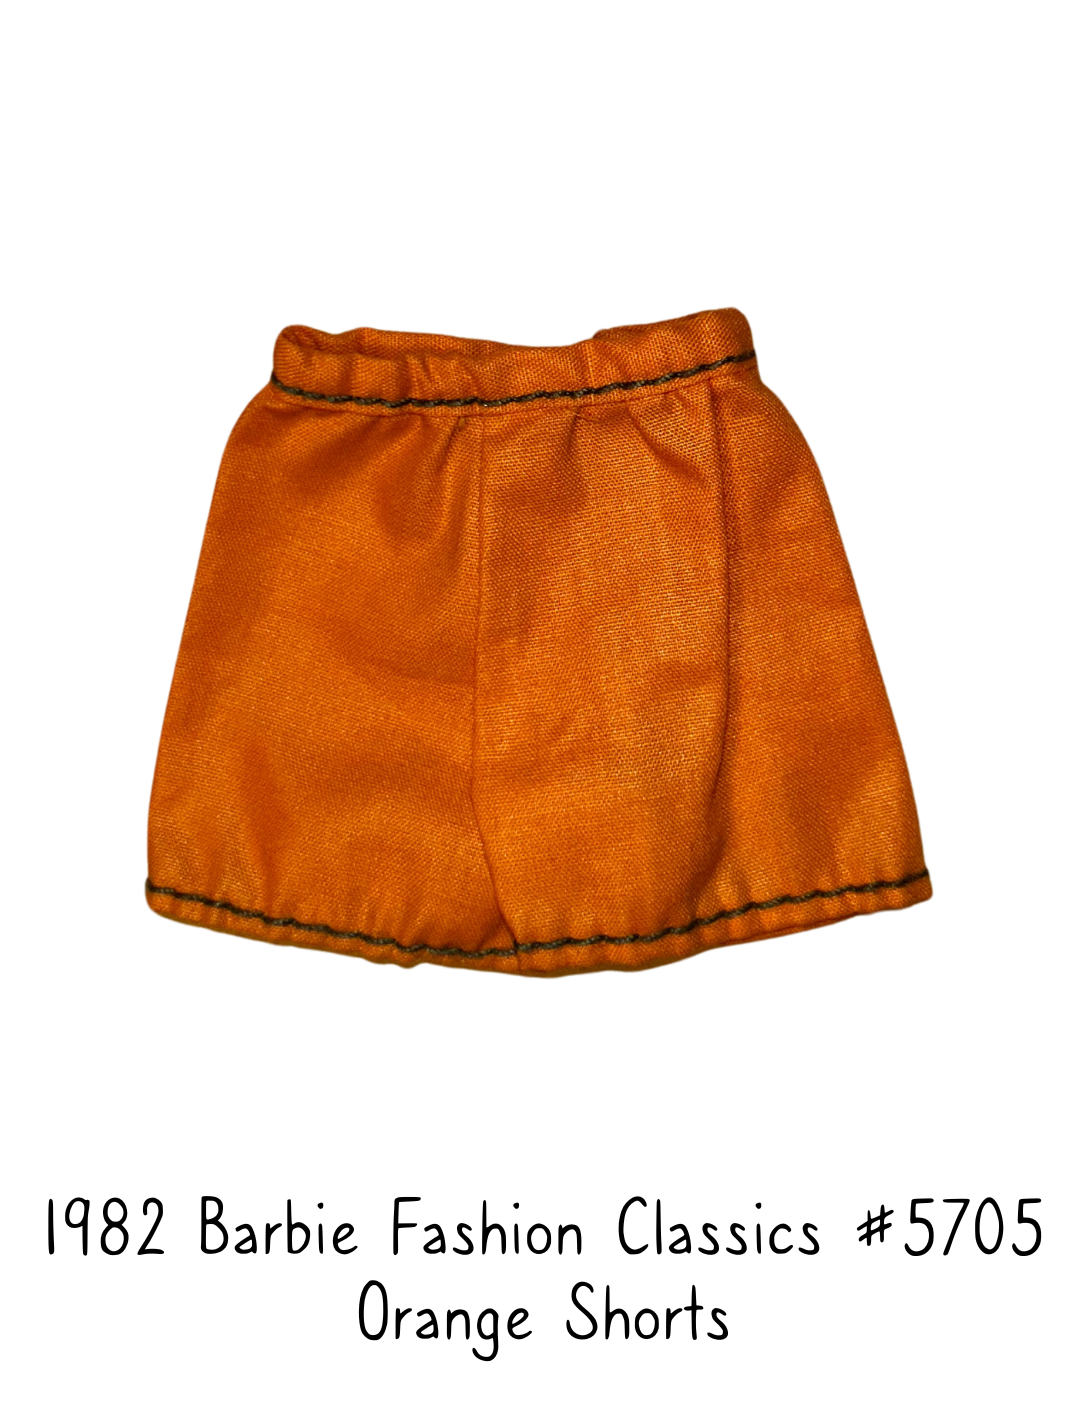 1982 Barbie Fashion Classics Orange Shorts #5705